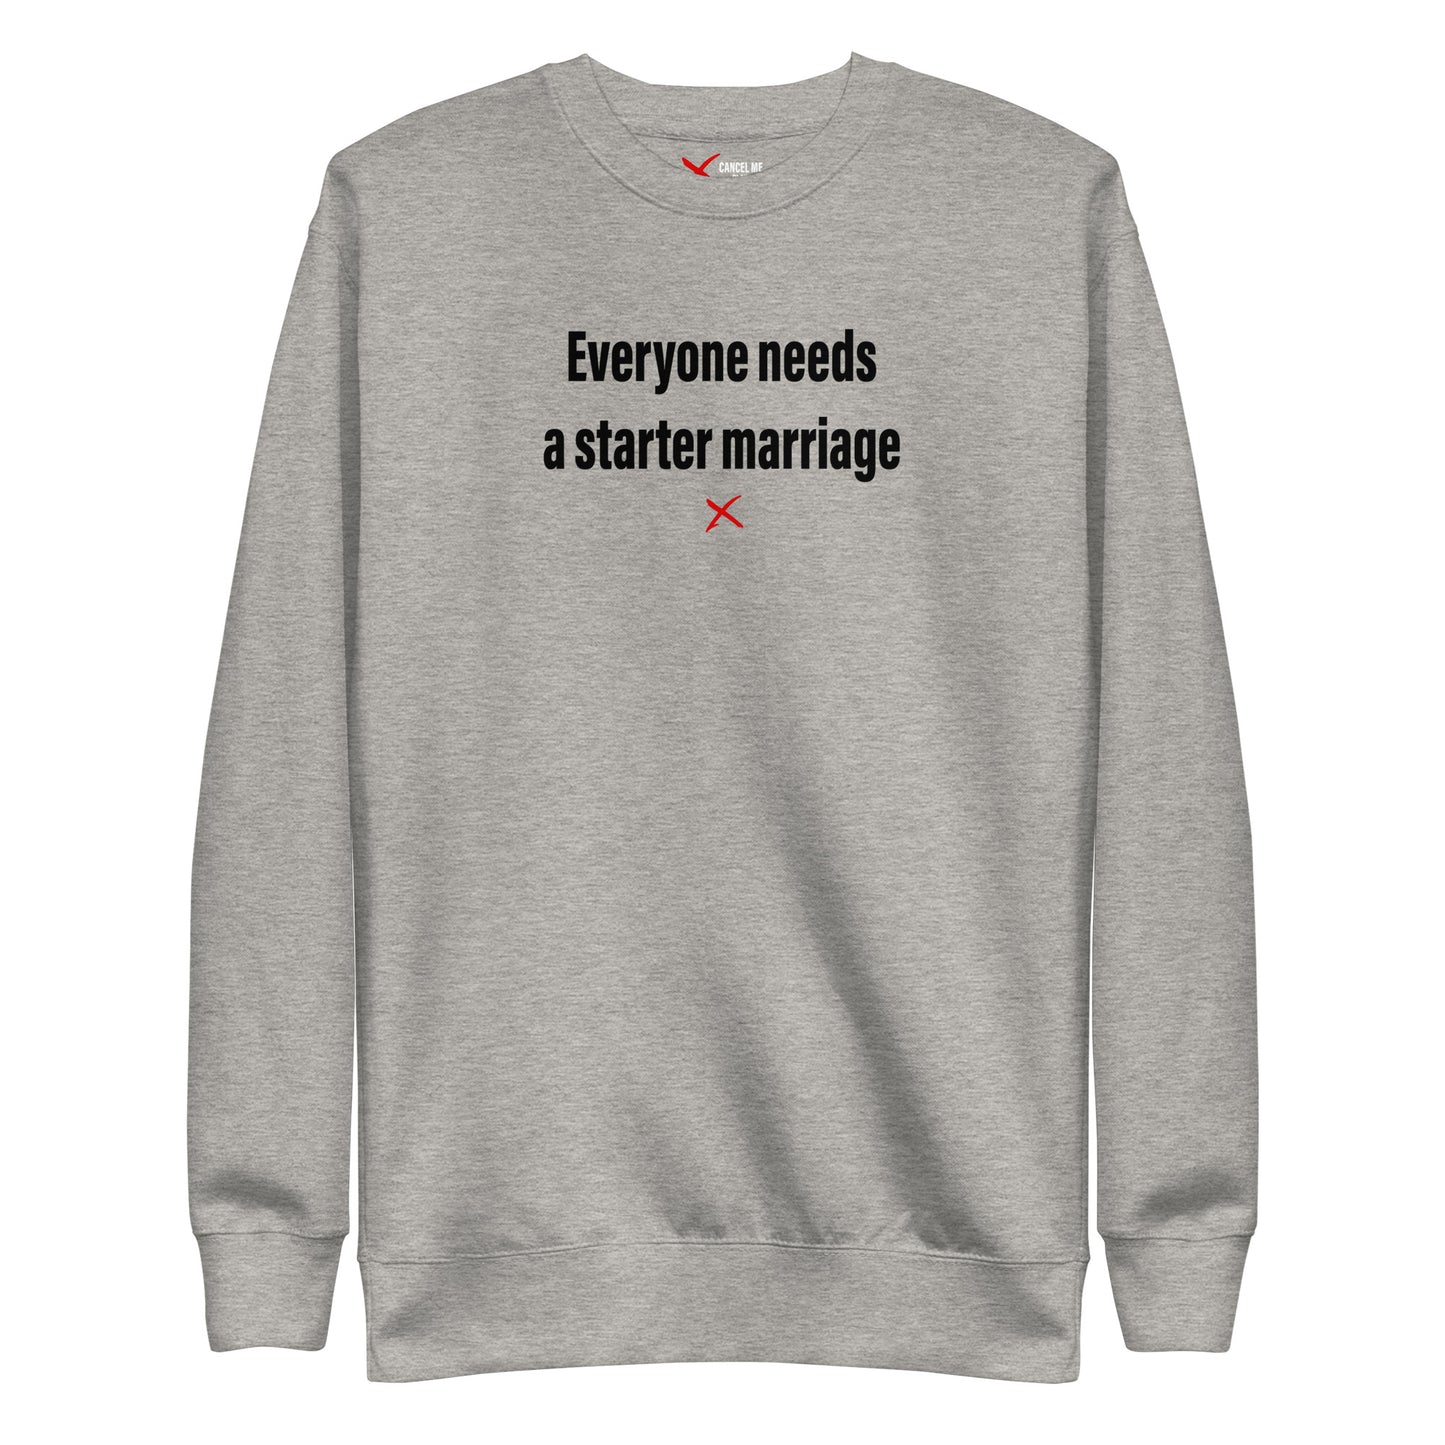 Everyone needs a starter marriage - Sweatshirt